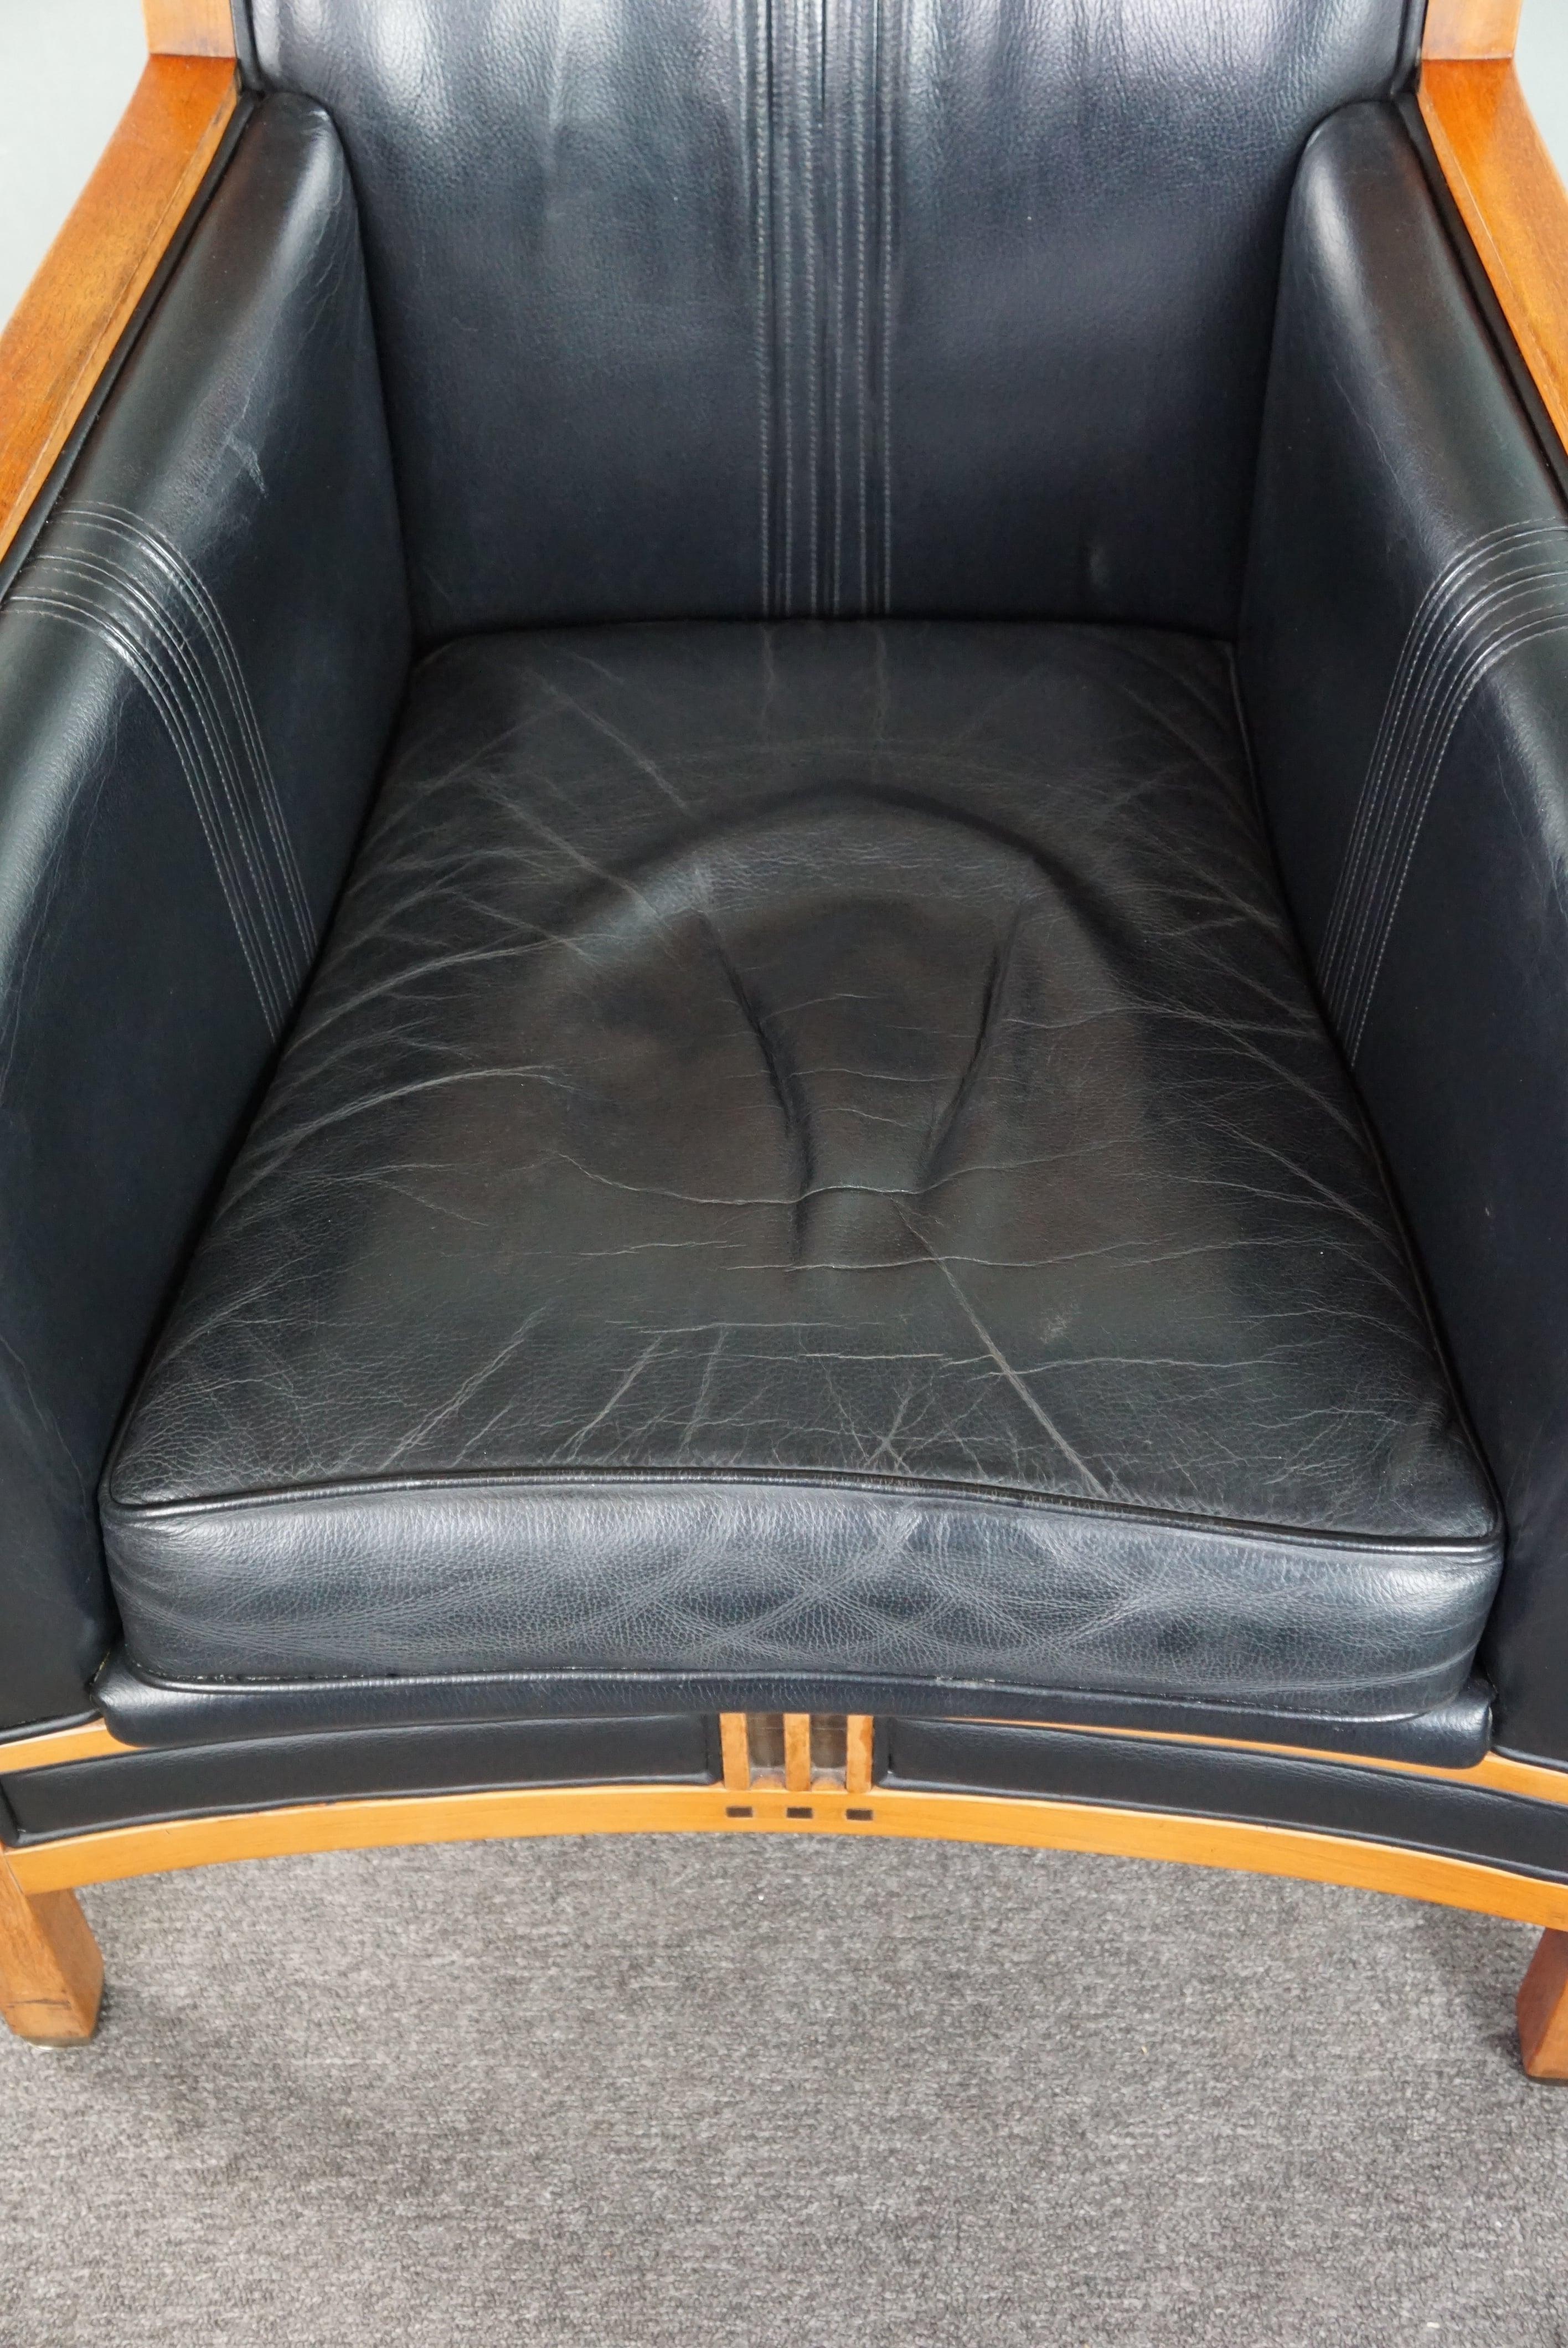 Leather Schuitema Decoforma Art Deco design black armchair with beautifull acccents For Sale